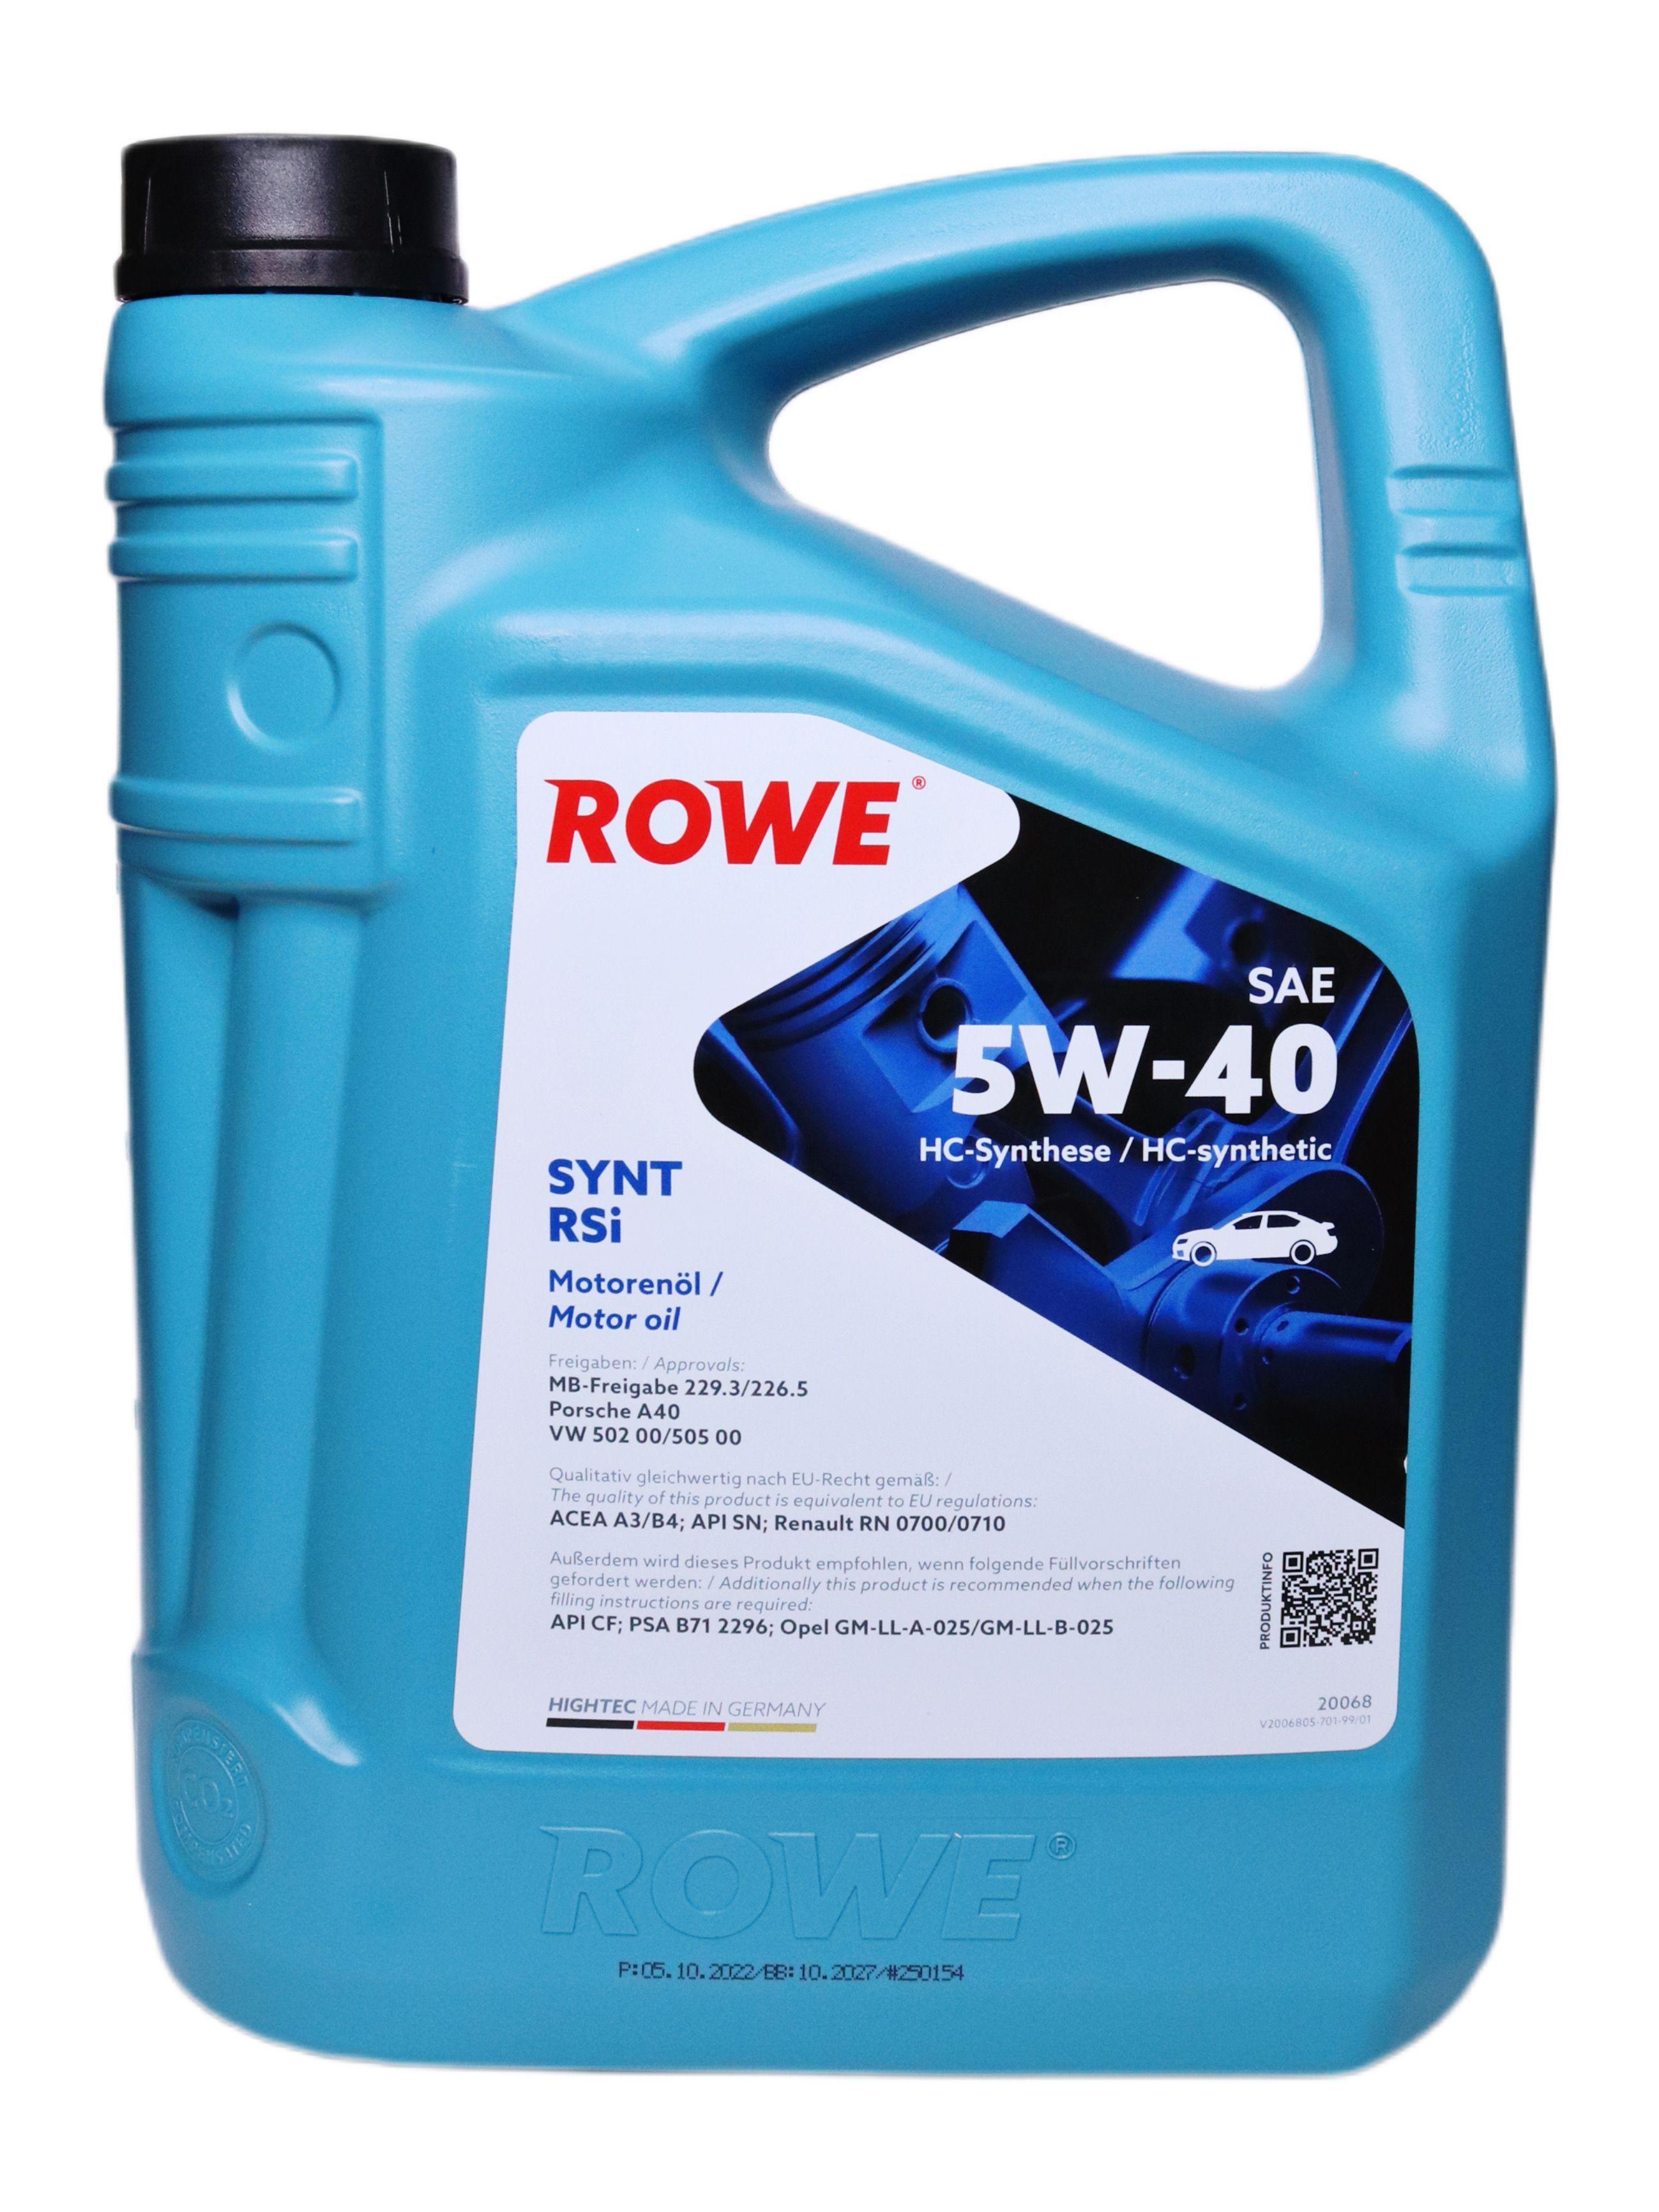 ROWE hightec synt rsi sae 5w-40 5W-40 Масло моторное, НС-синтетическое, 5 л